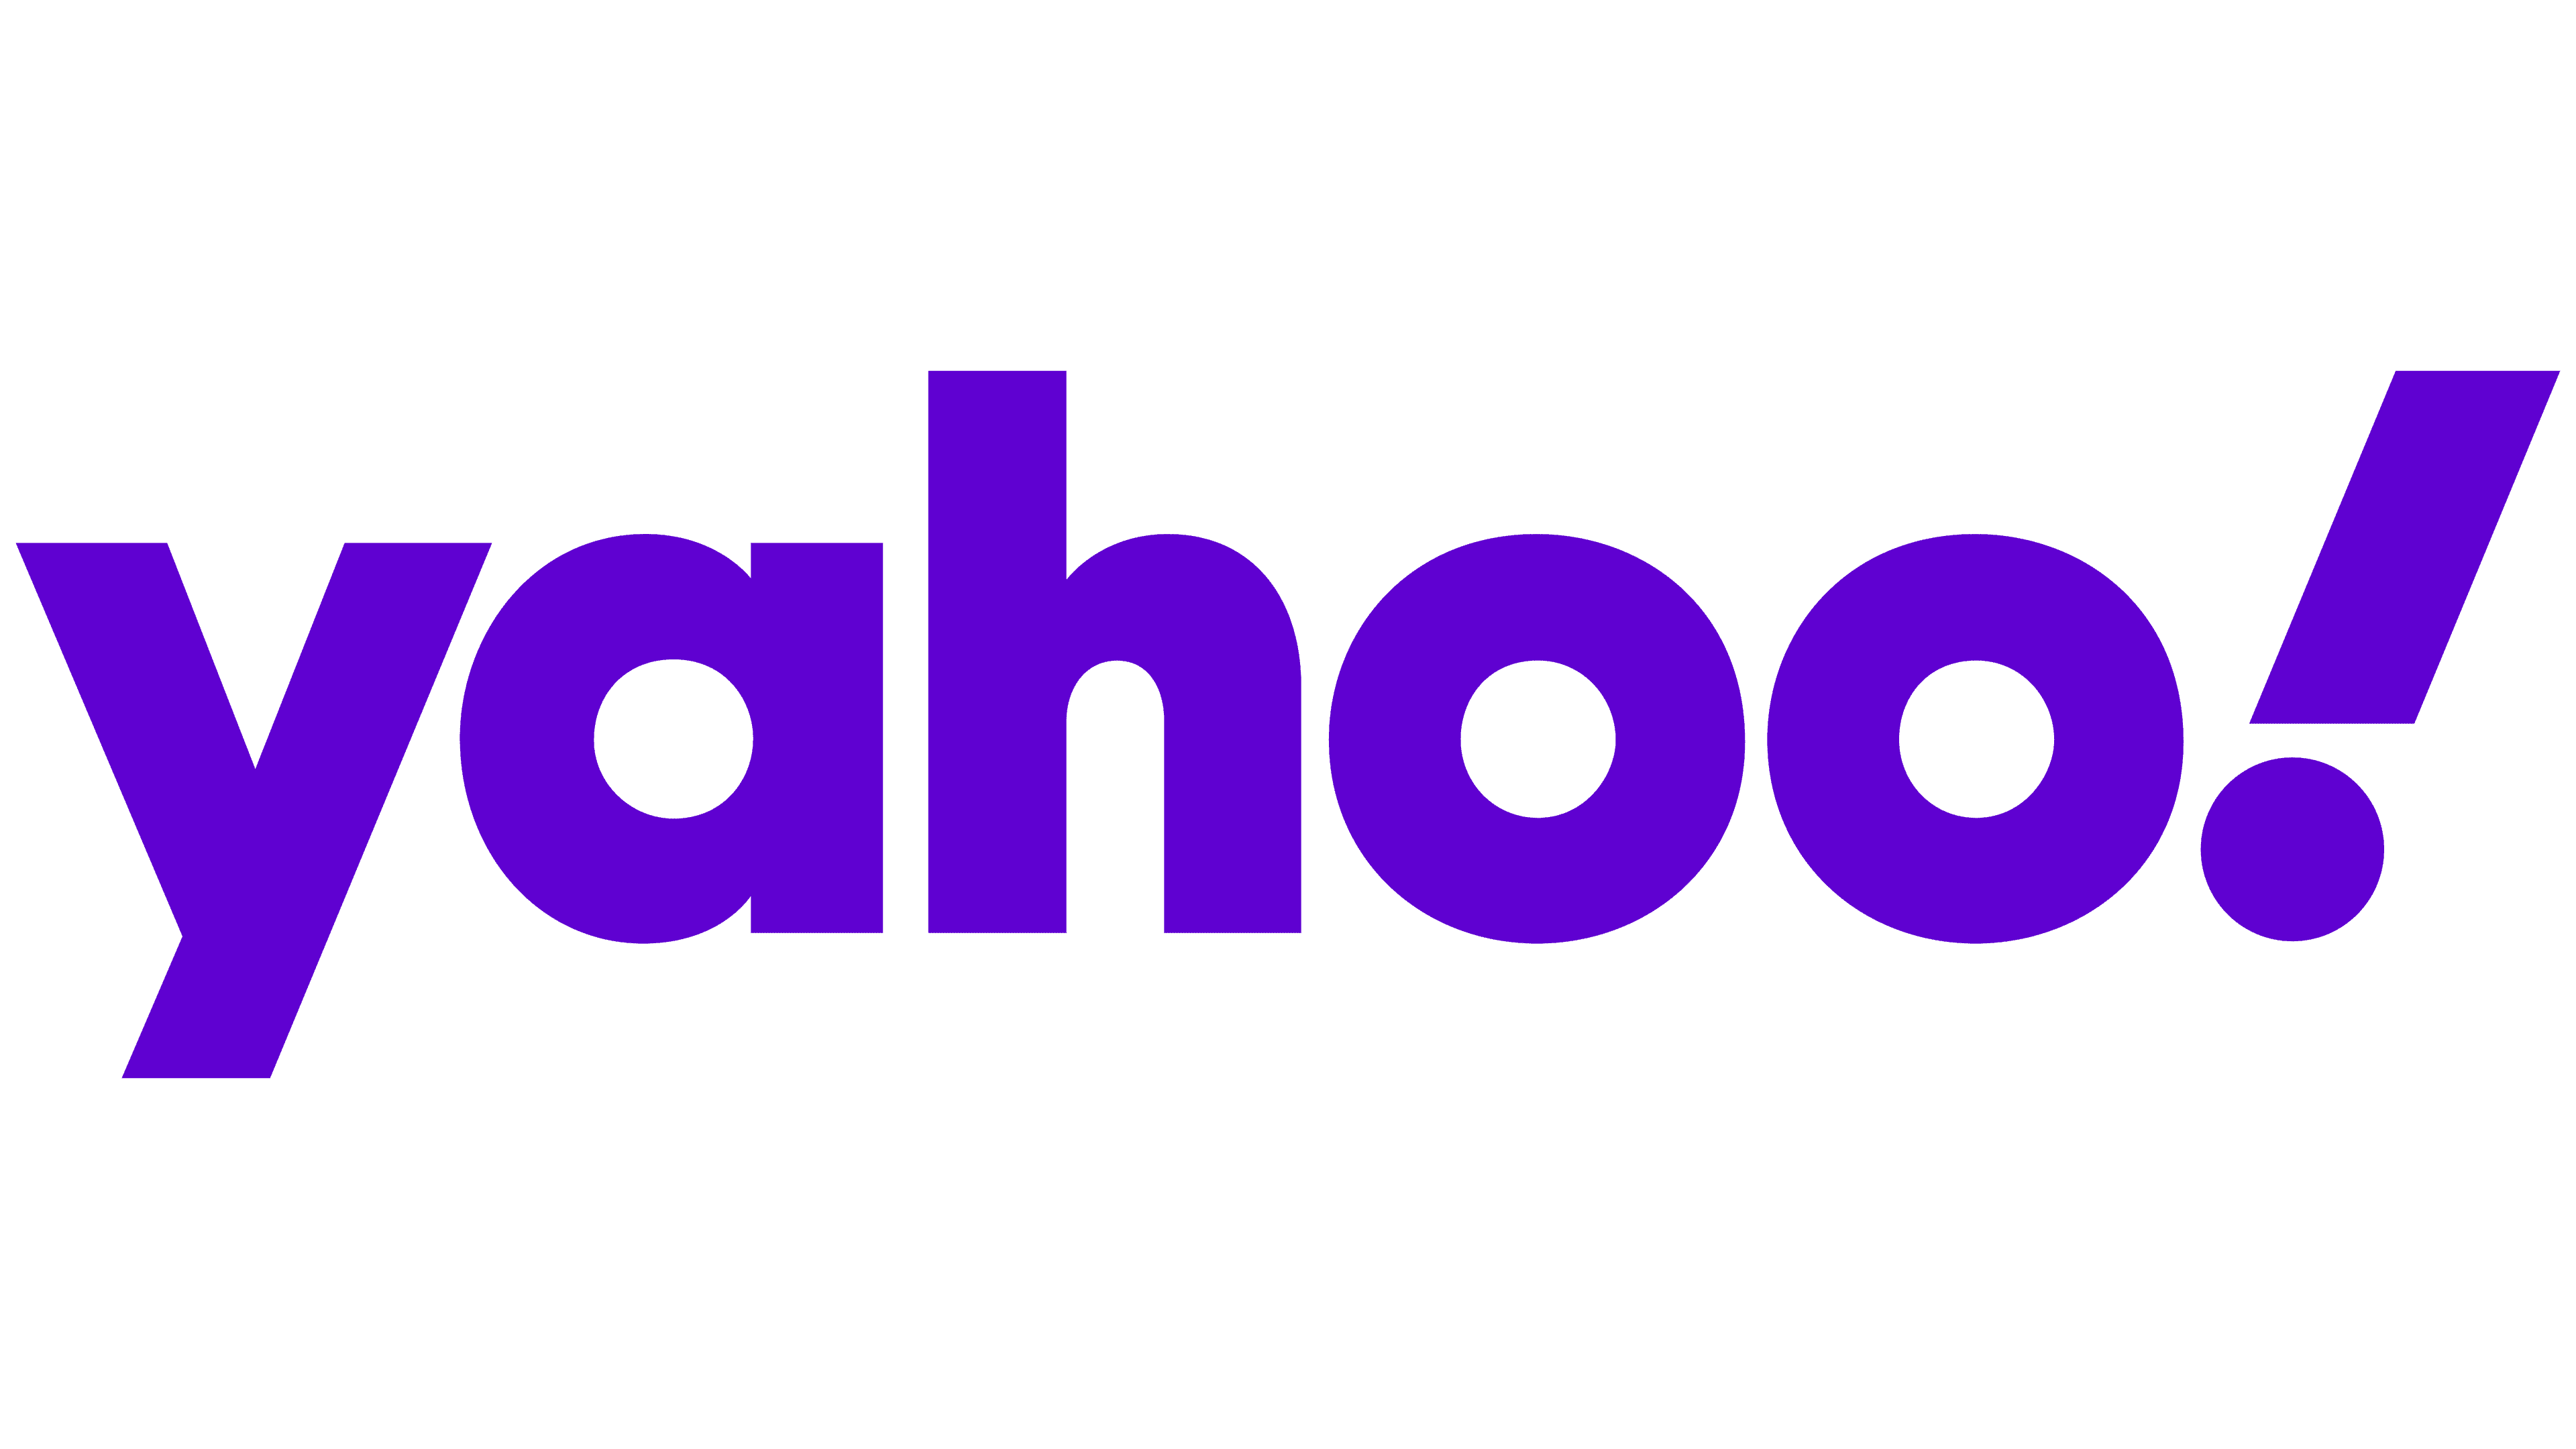 Yahoo-Logo.png